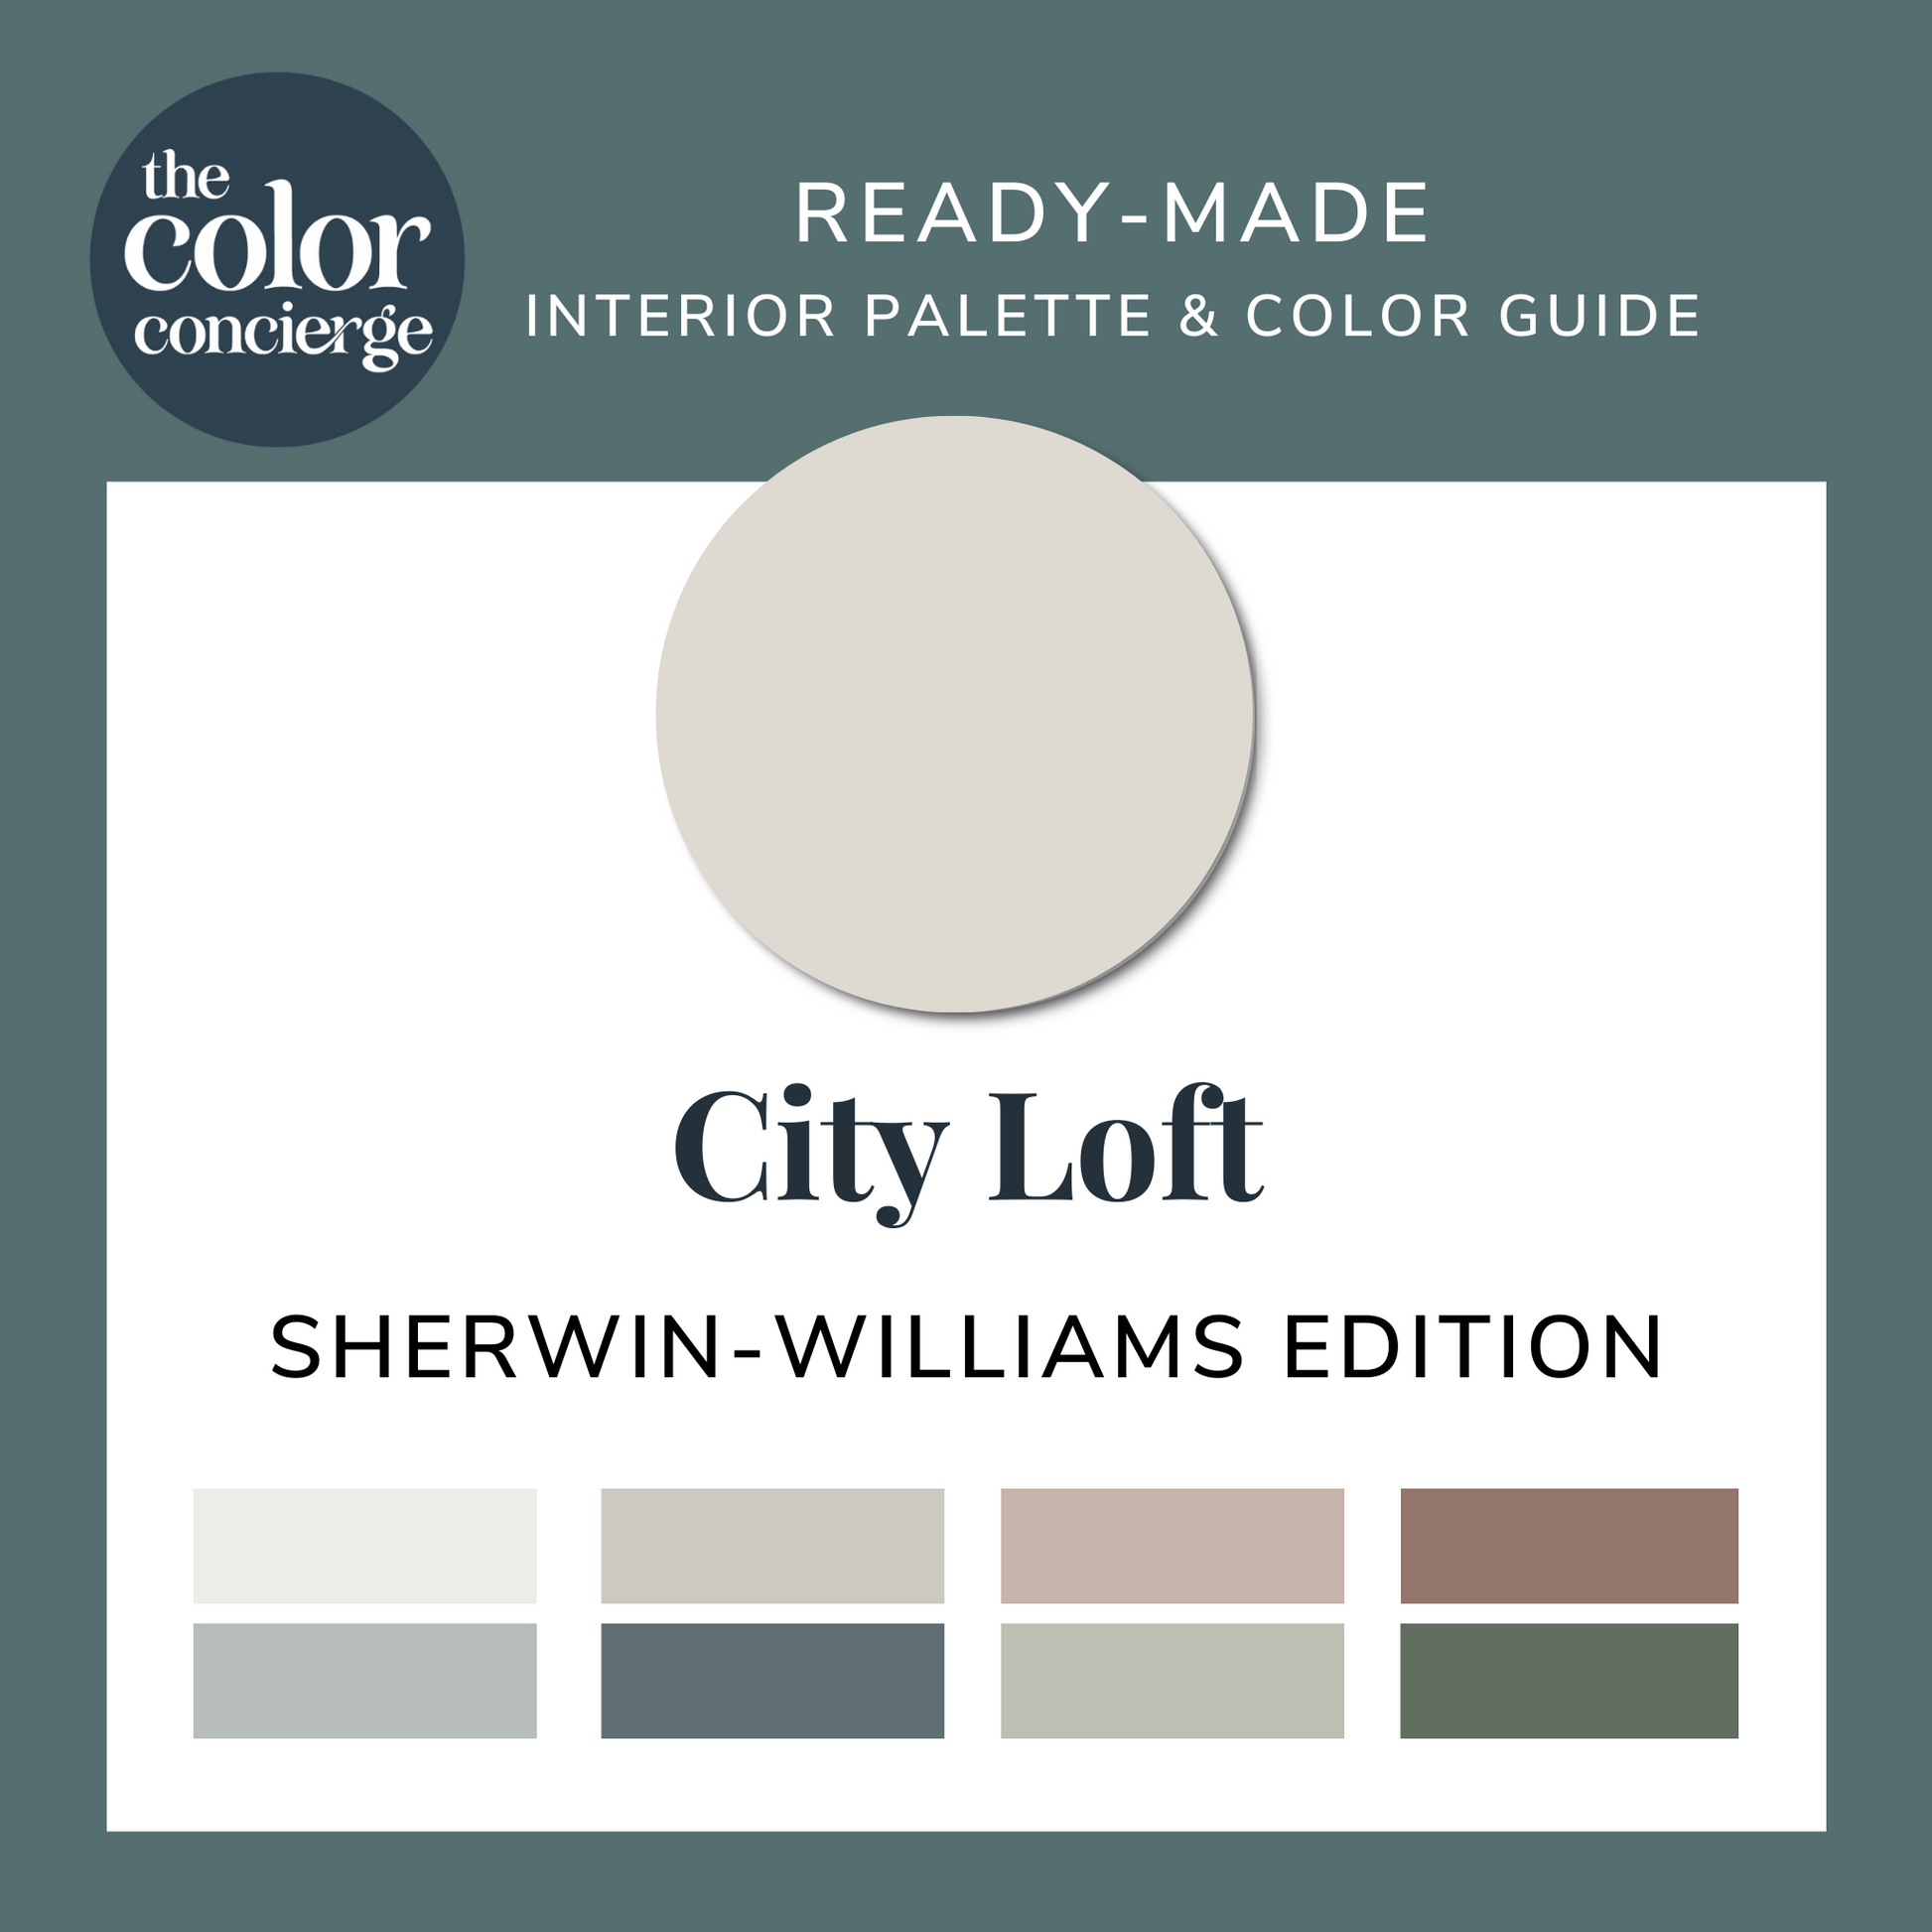 Sherwin-Williams City Loft color palette guide